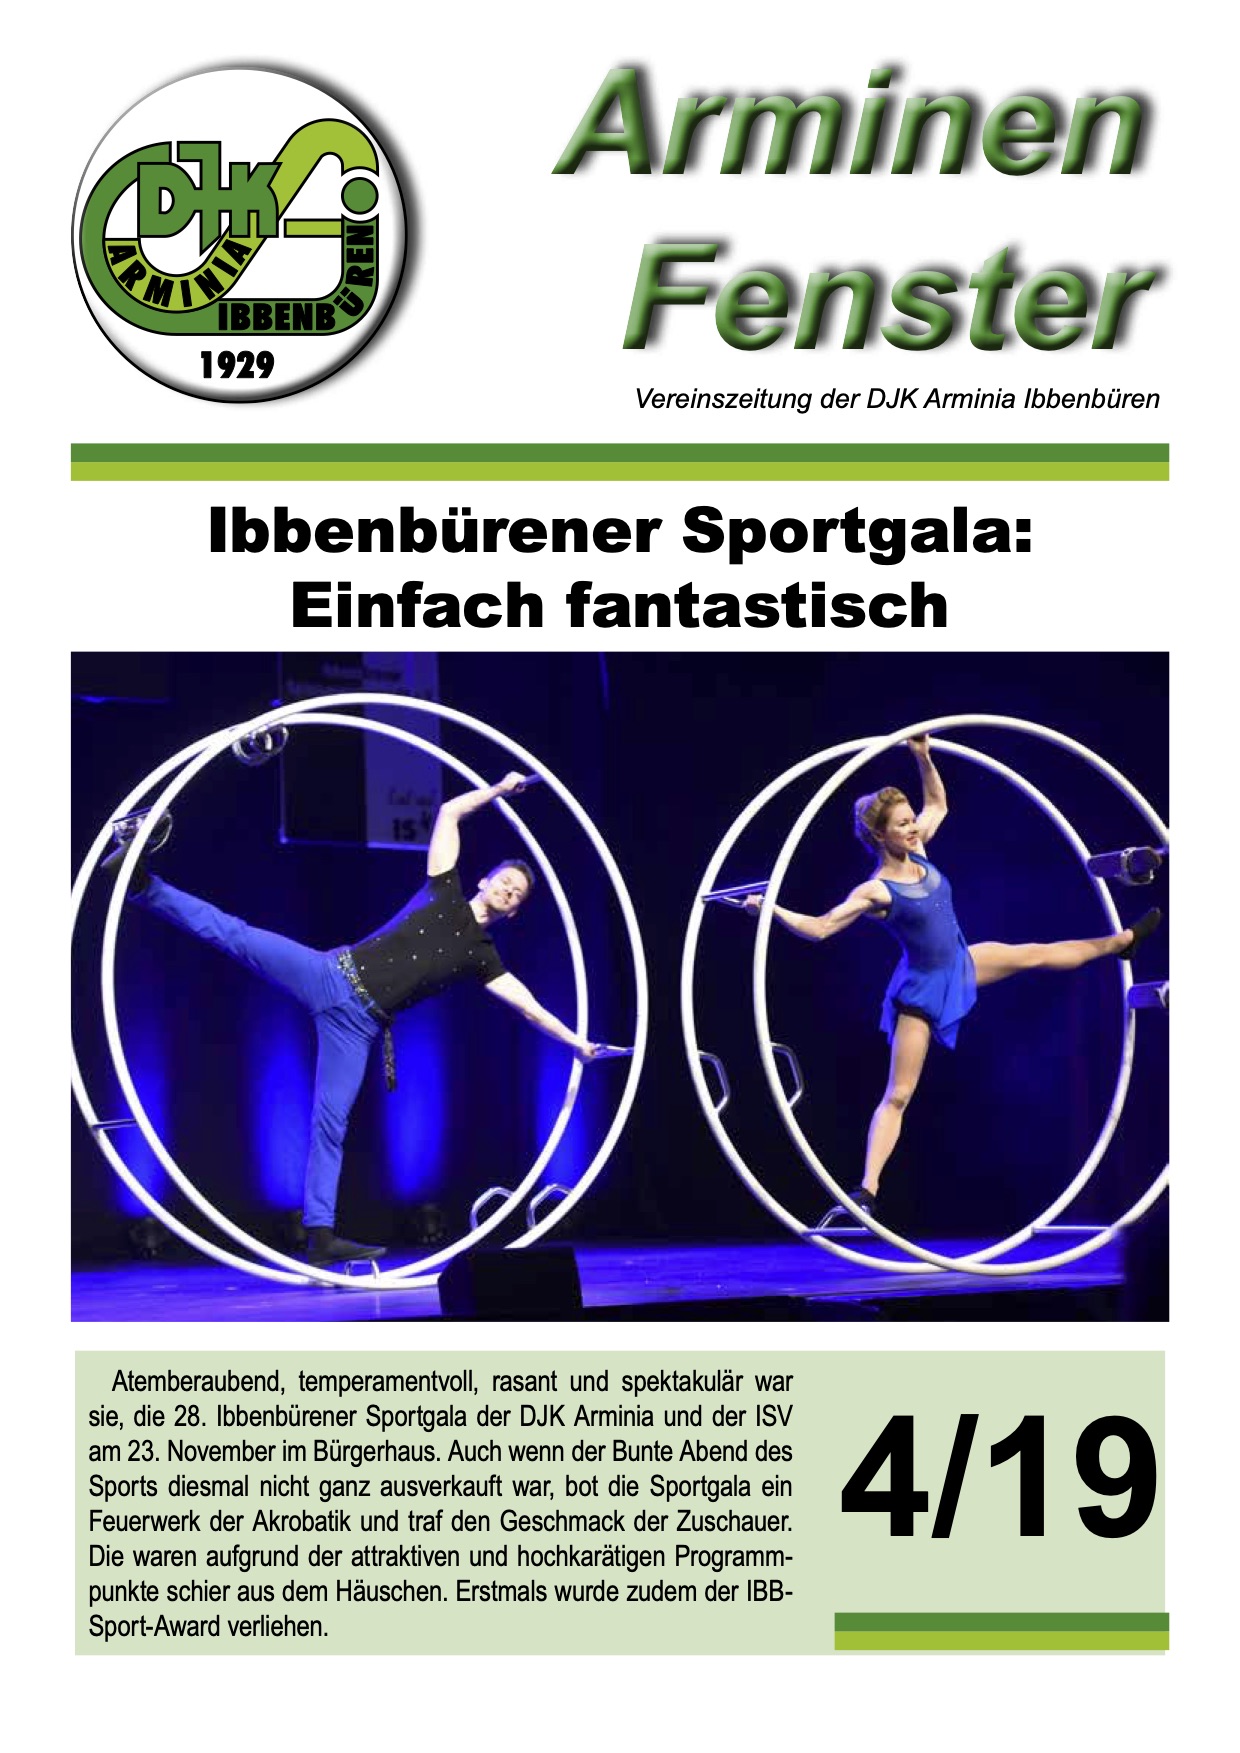 Arminen Fenster 04/19